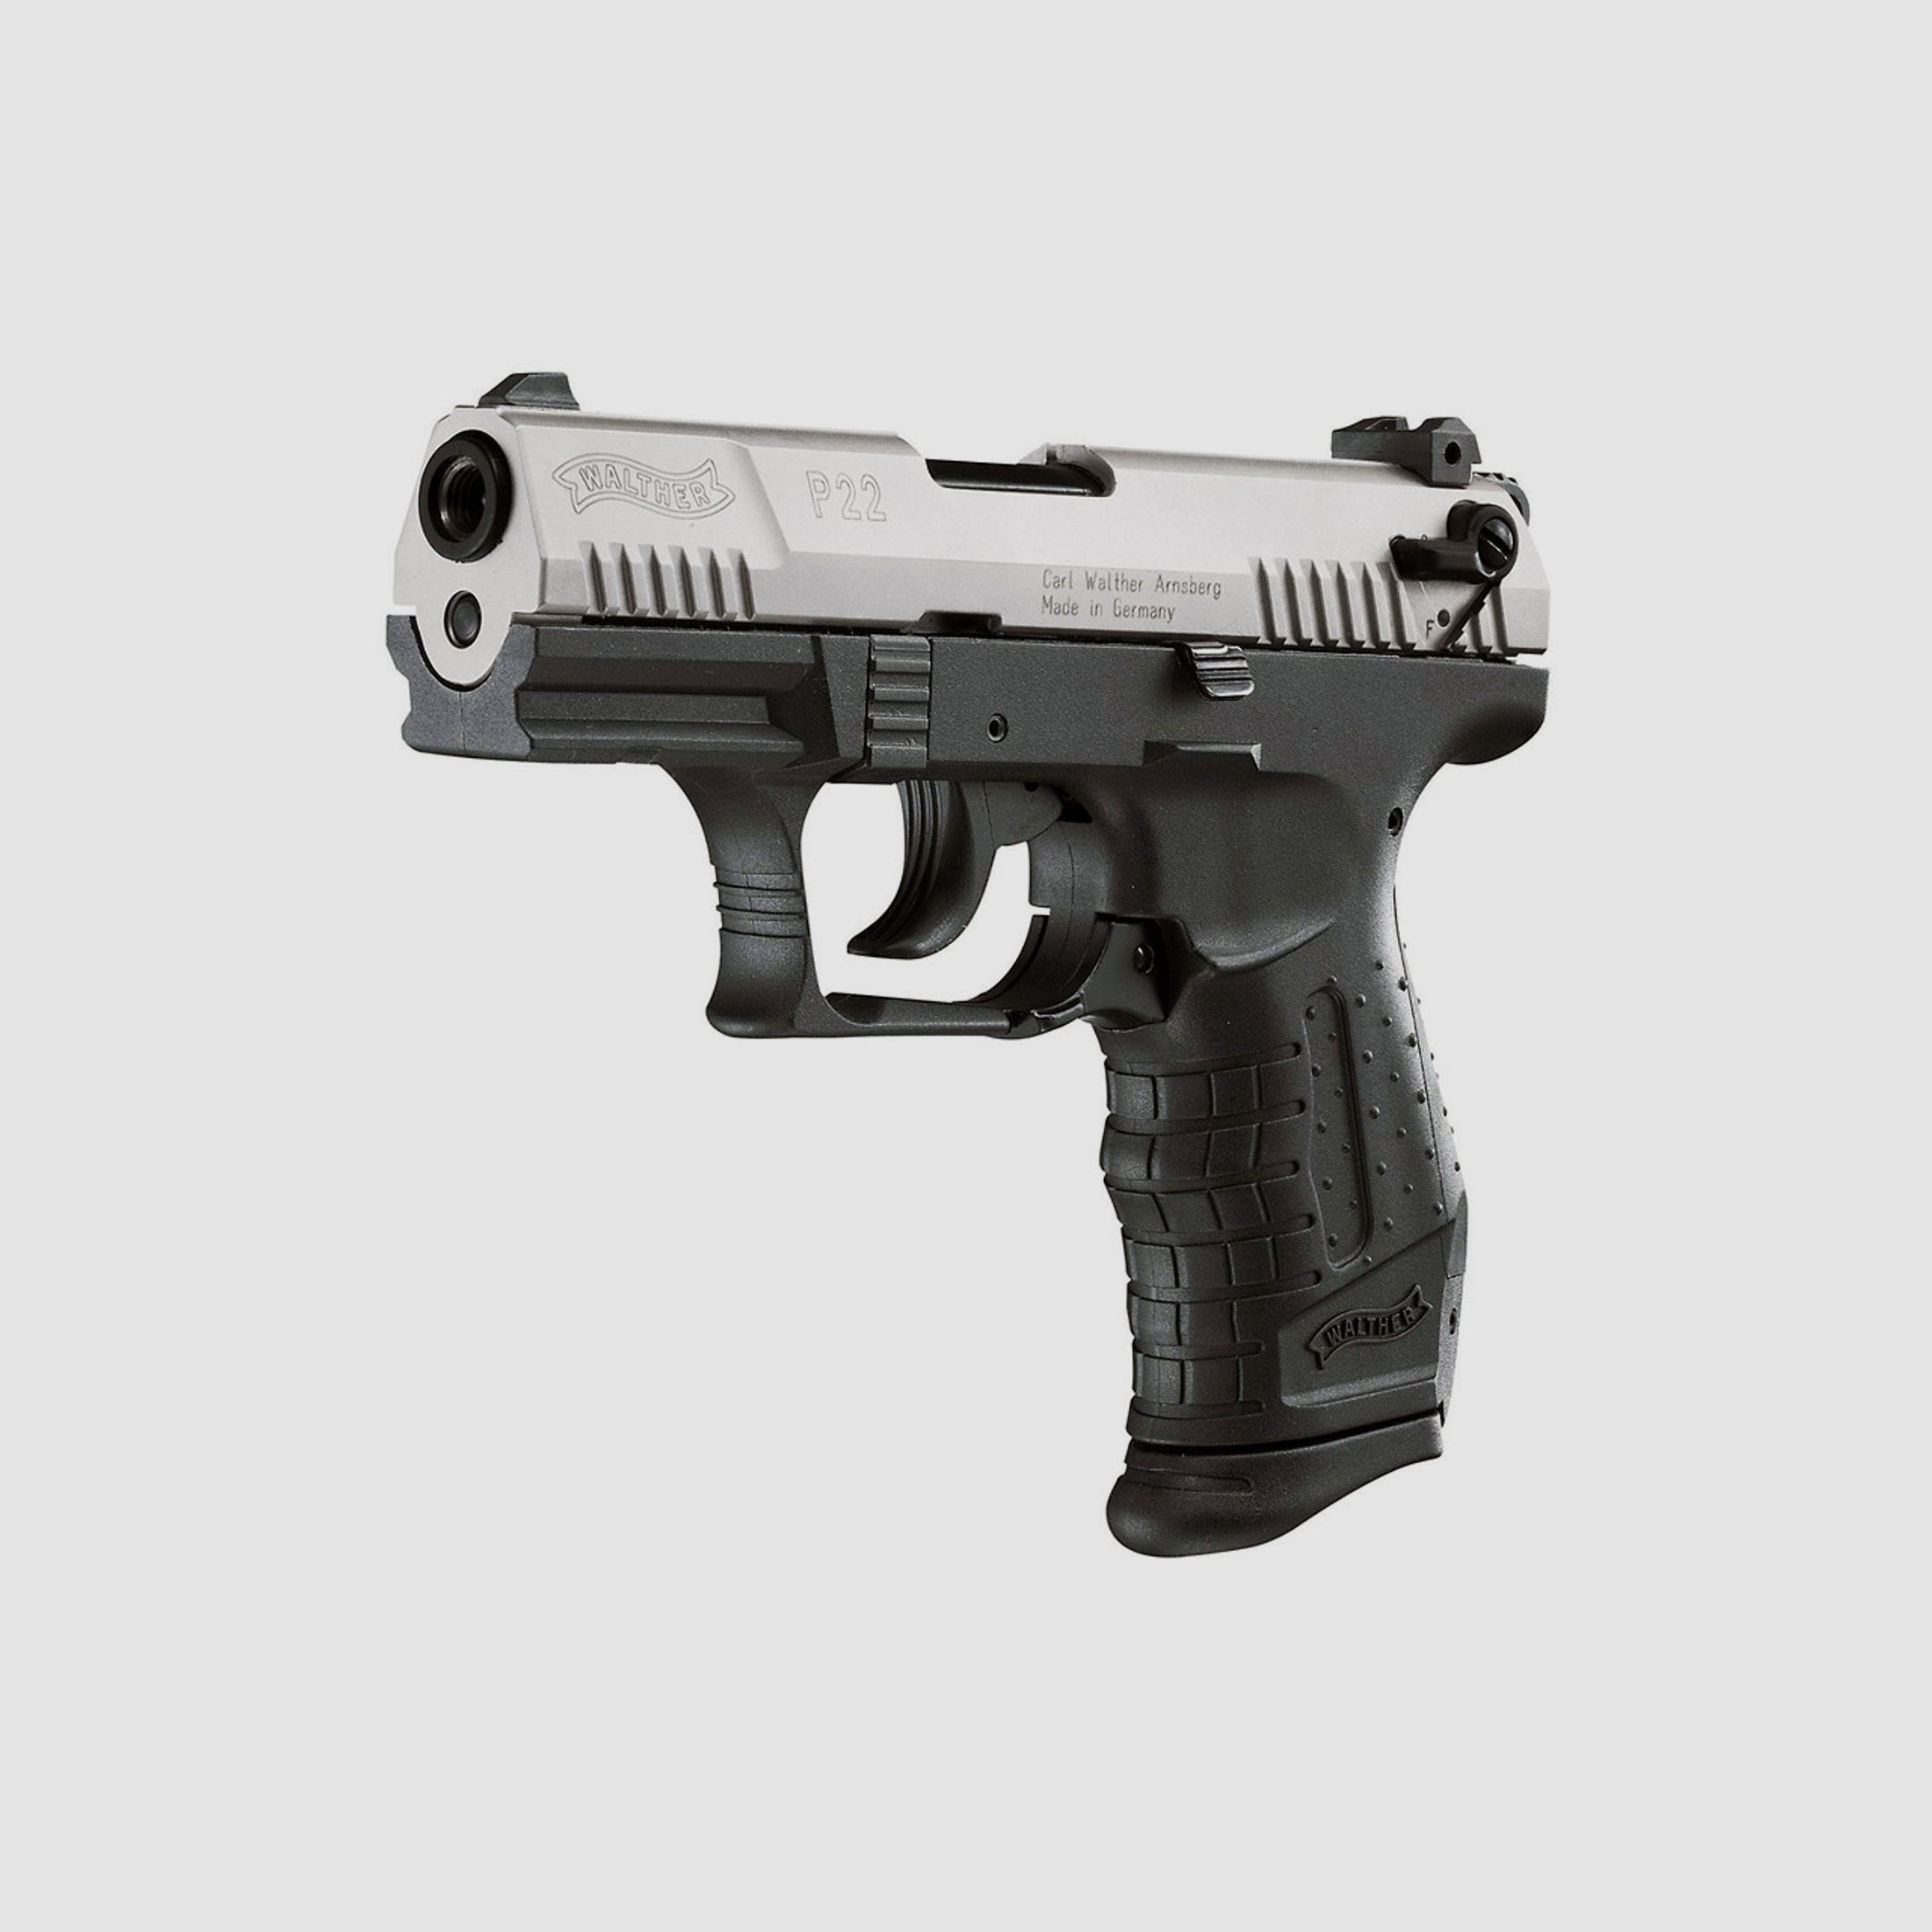 Schreckschuss Pistole Walther P22 bicolor nickel Kaliber 9 mm P.A.K. (P18)